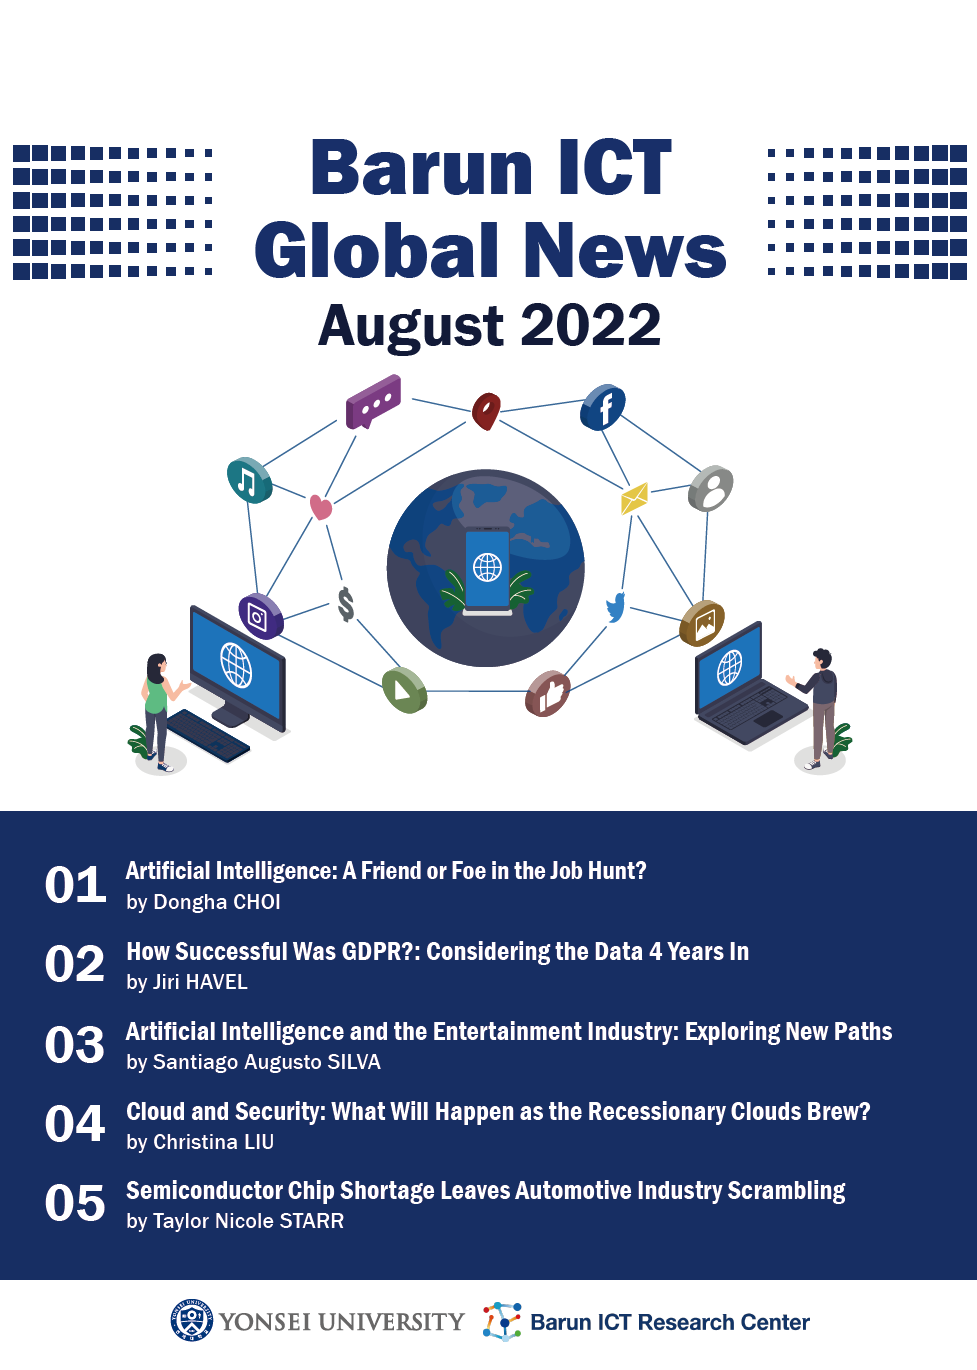 Barun ICT Global News August 2022